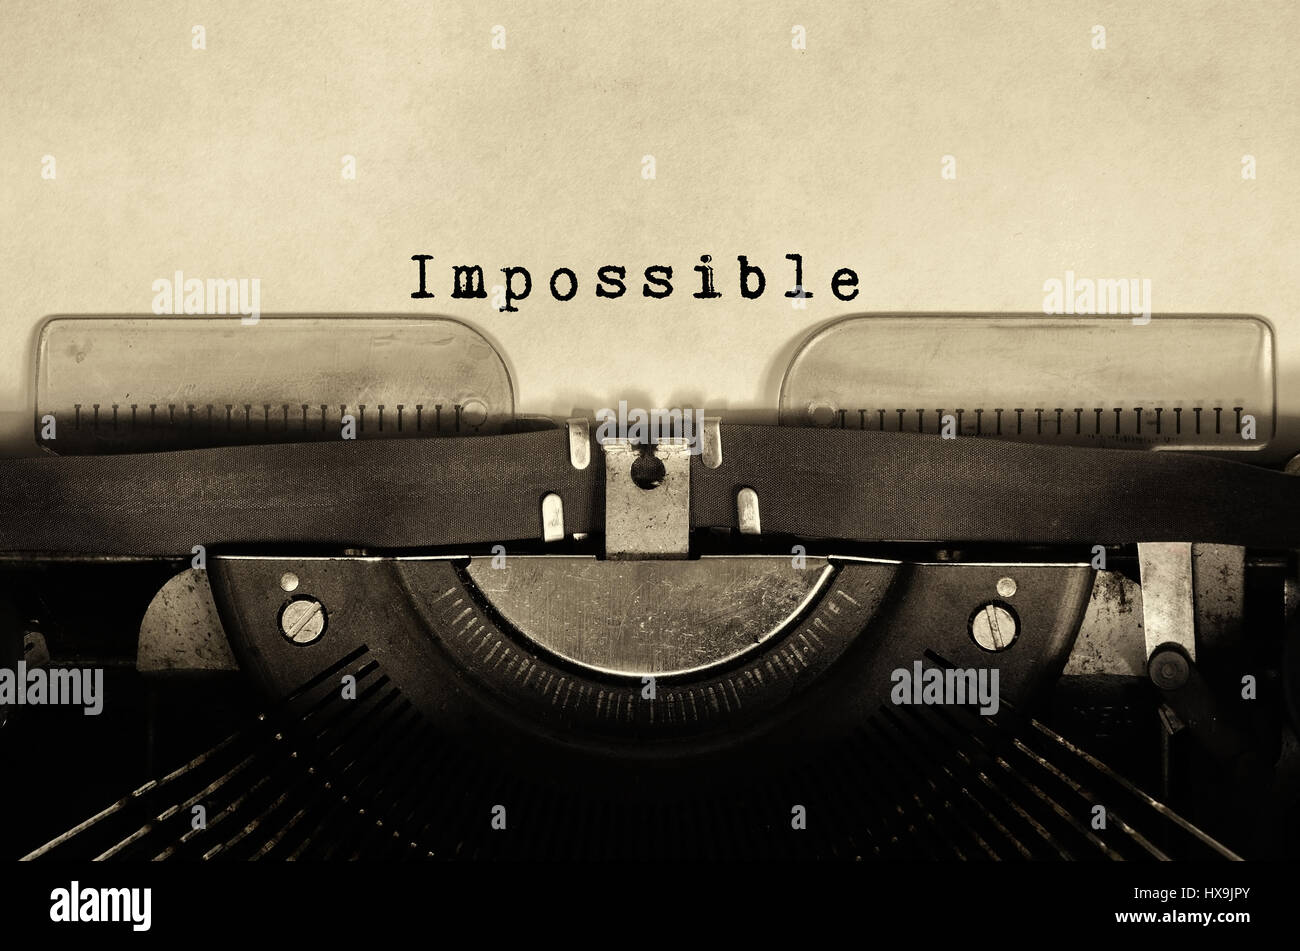 Impossible dactylographiée sur vintage typewriter Banque D'Images